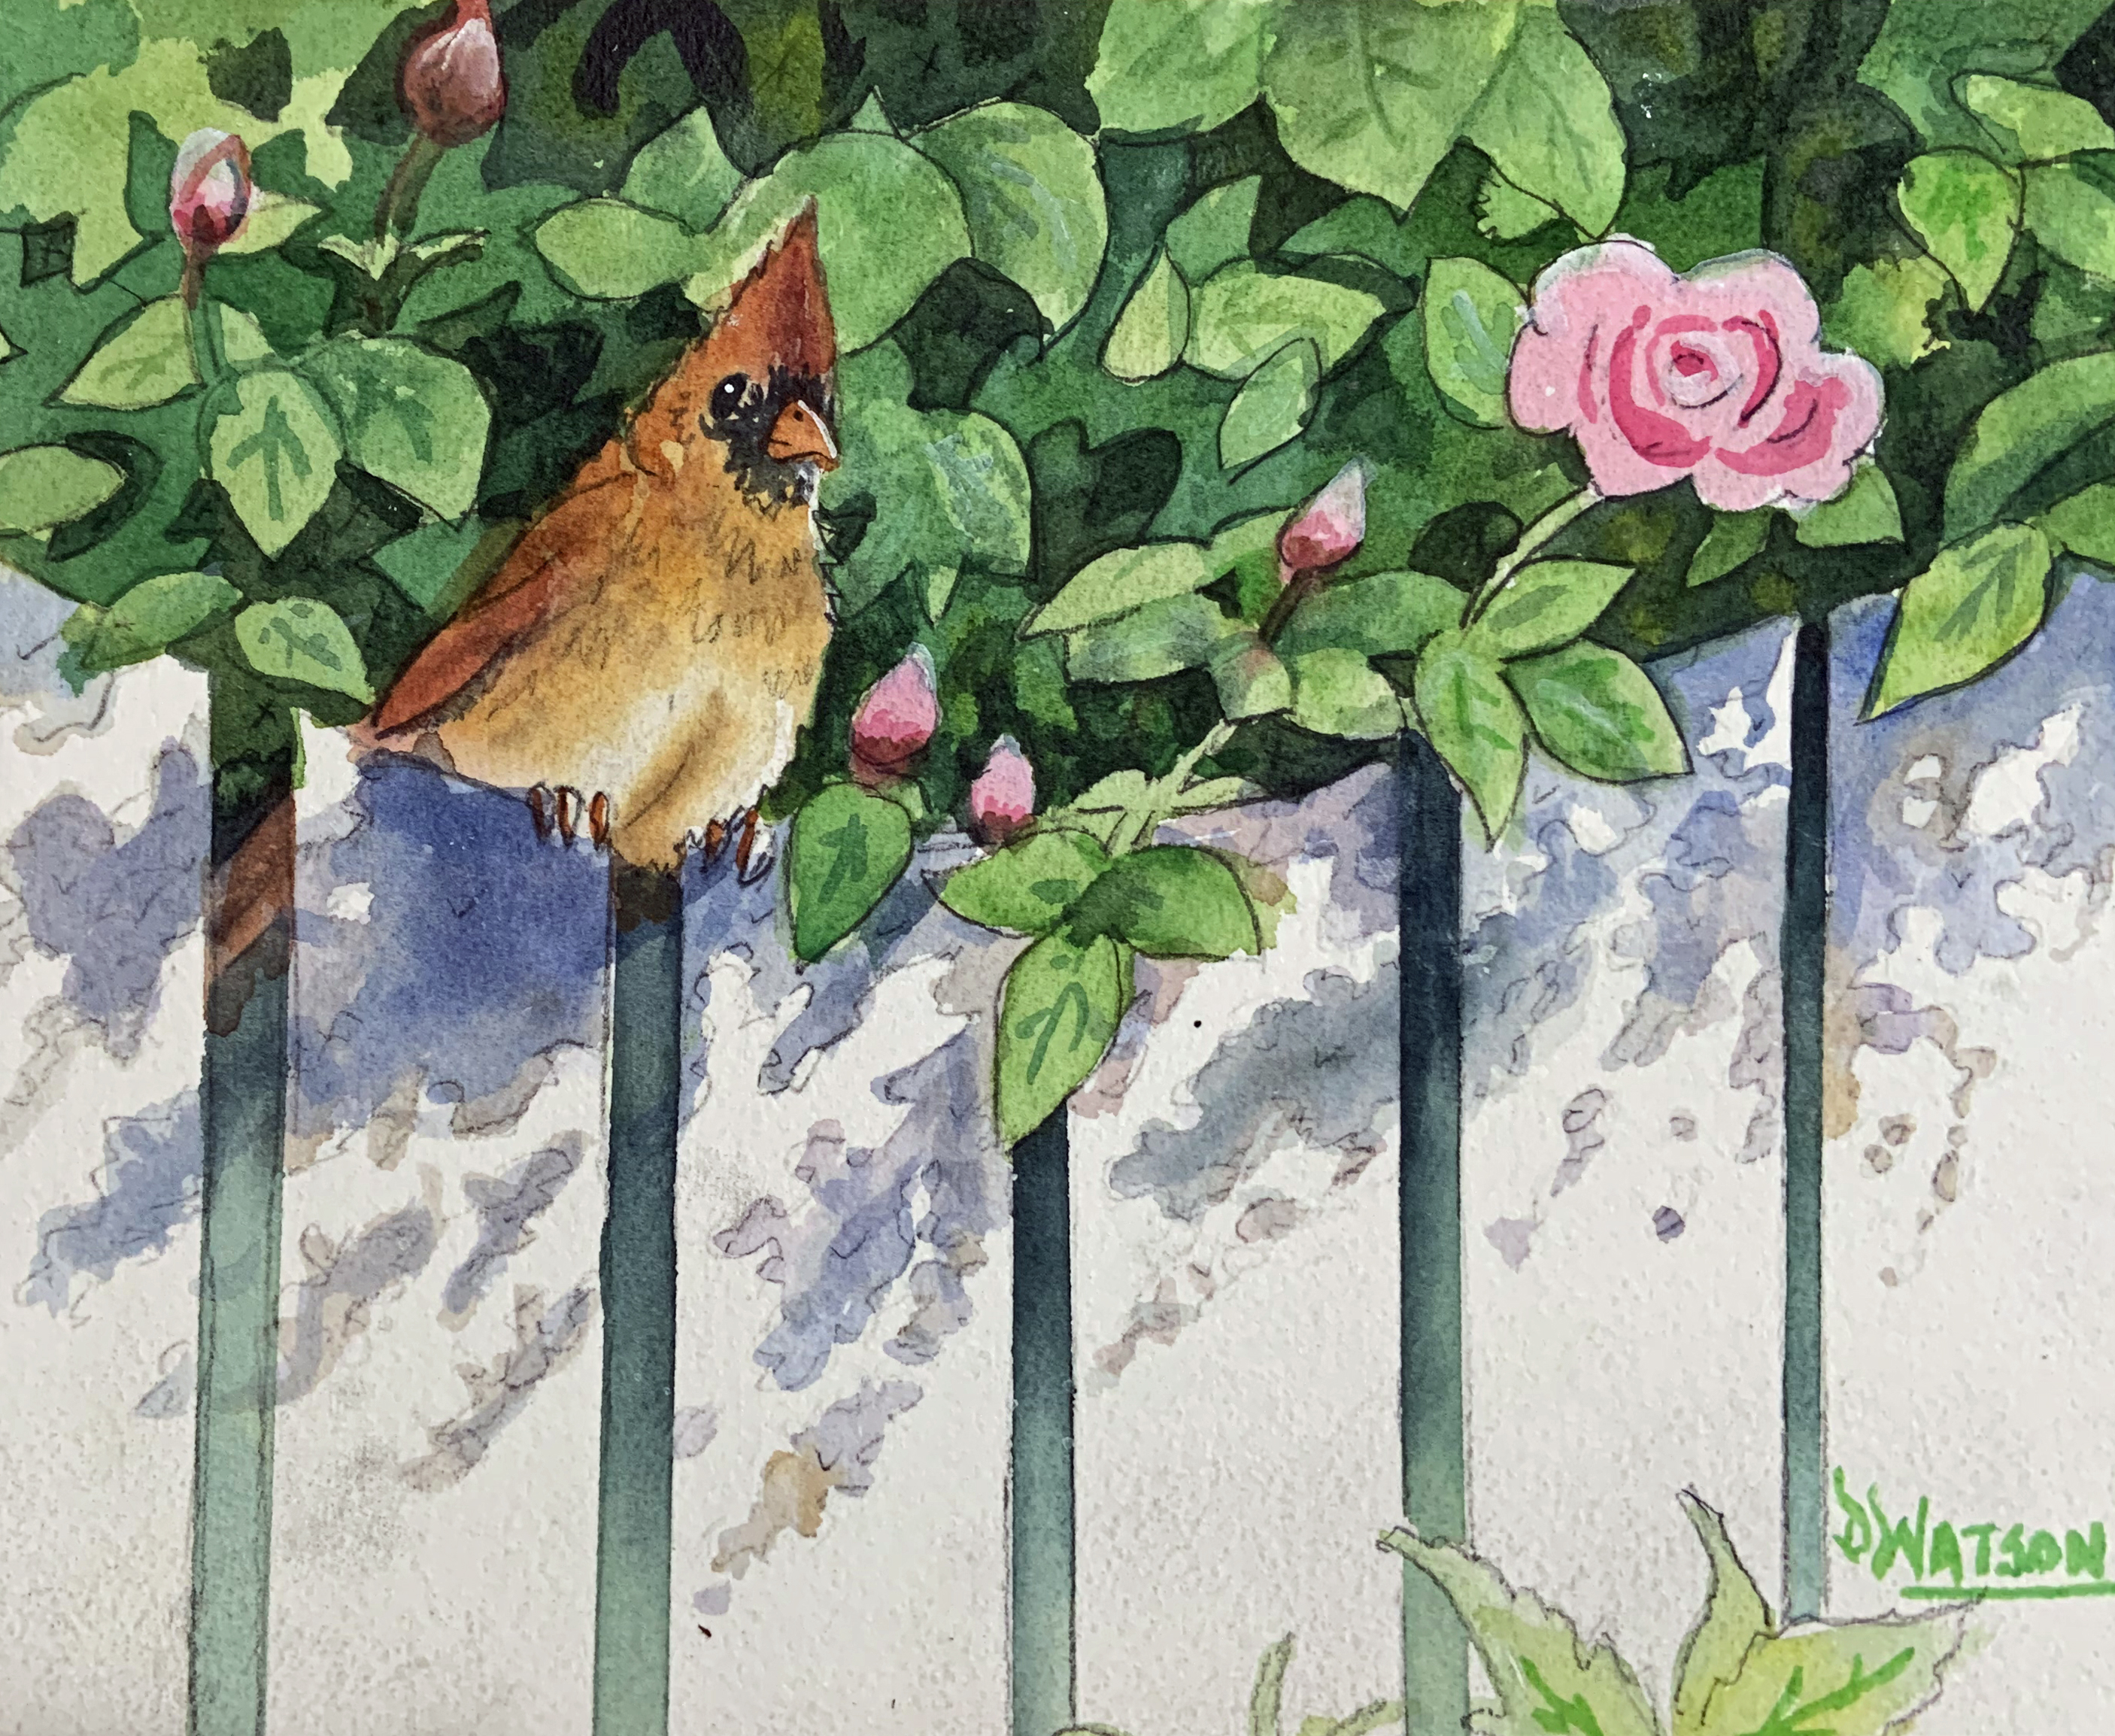 Garden Friend - Rose Bush, Cardinal and Shadows | Watson Watercolor